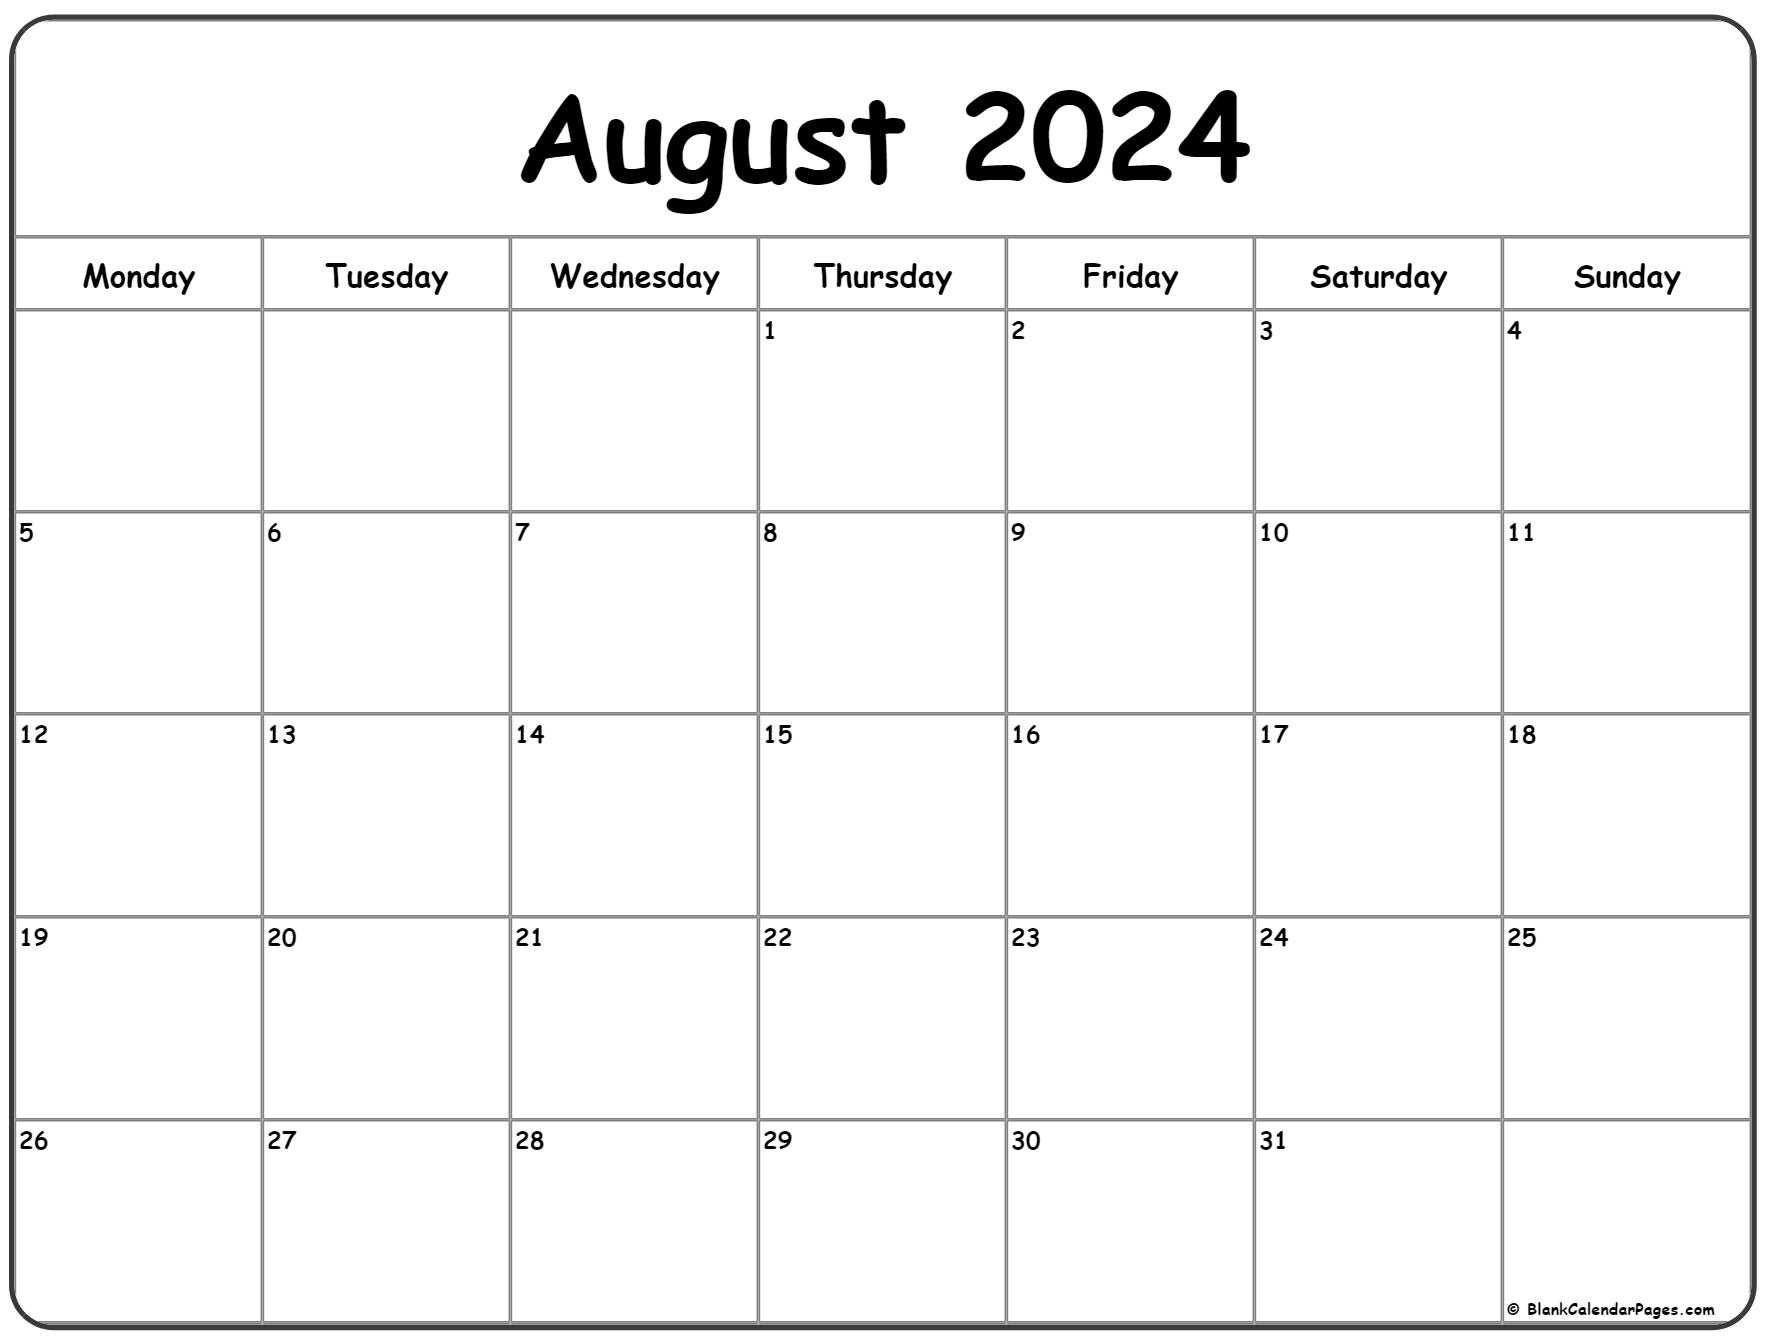 August 2024 Monday Calendar | Monday To Sunday for Printable August 2024 Calendar